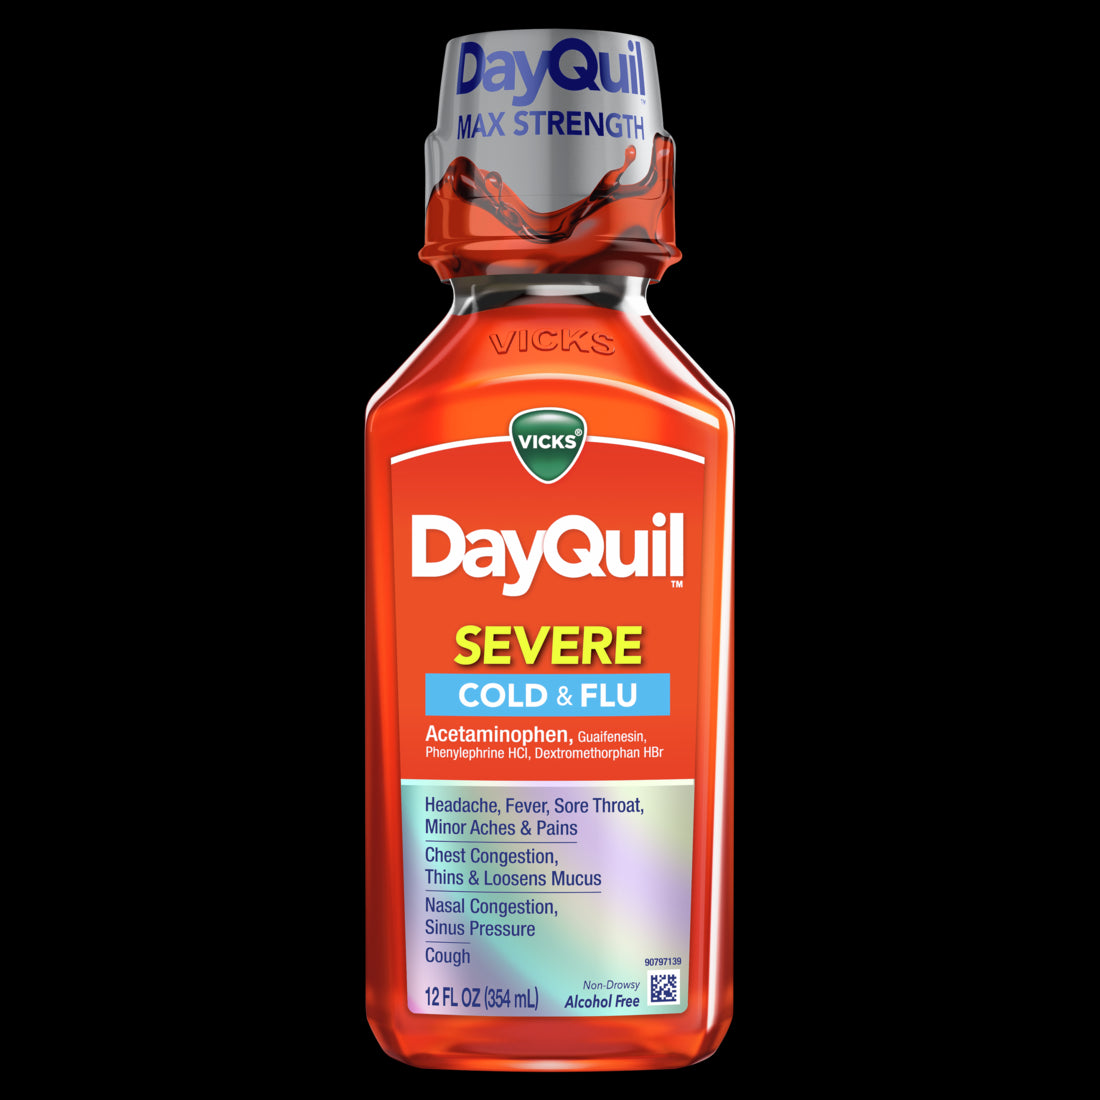 Vicks DayQuil SEVERE Cold and Flu Medicine Maximum Strength - 12oz/12pk